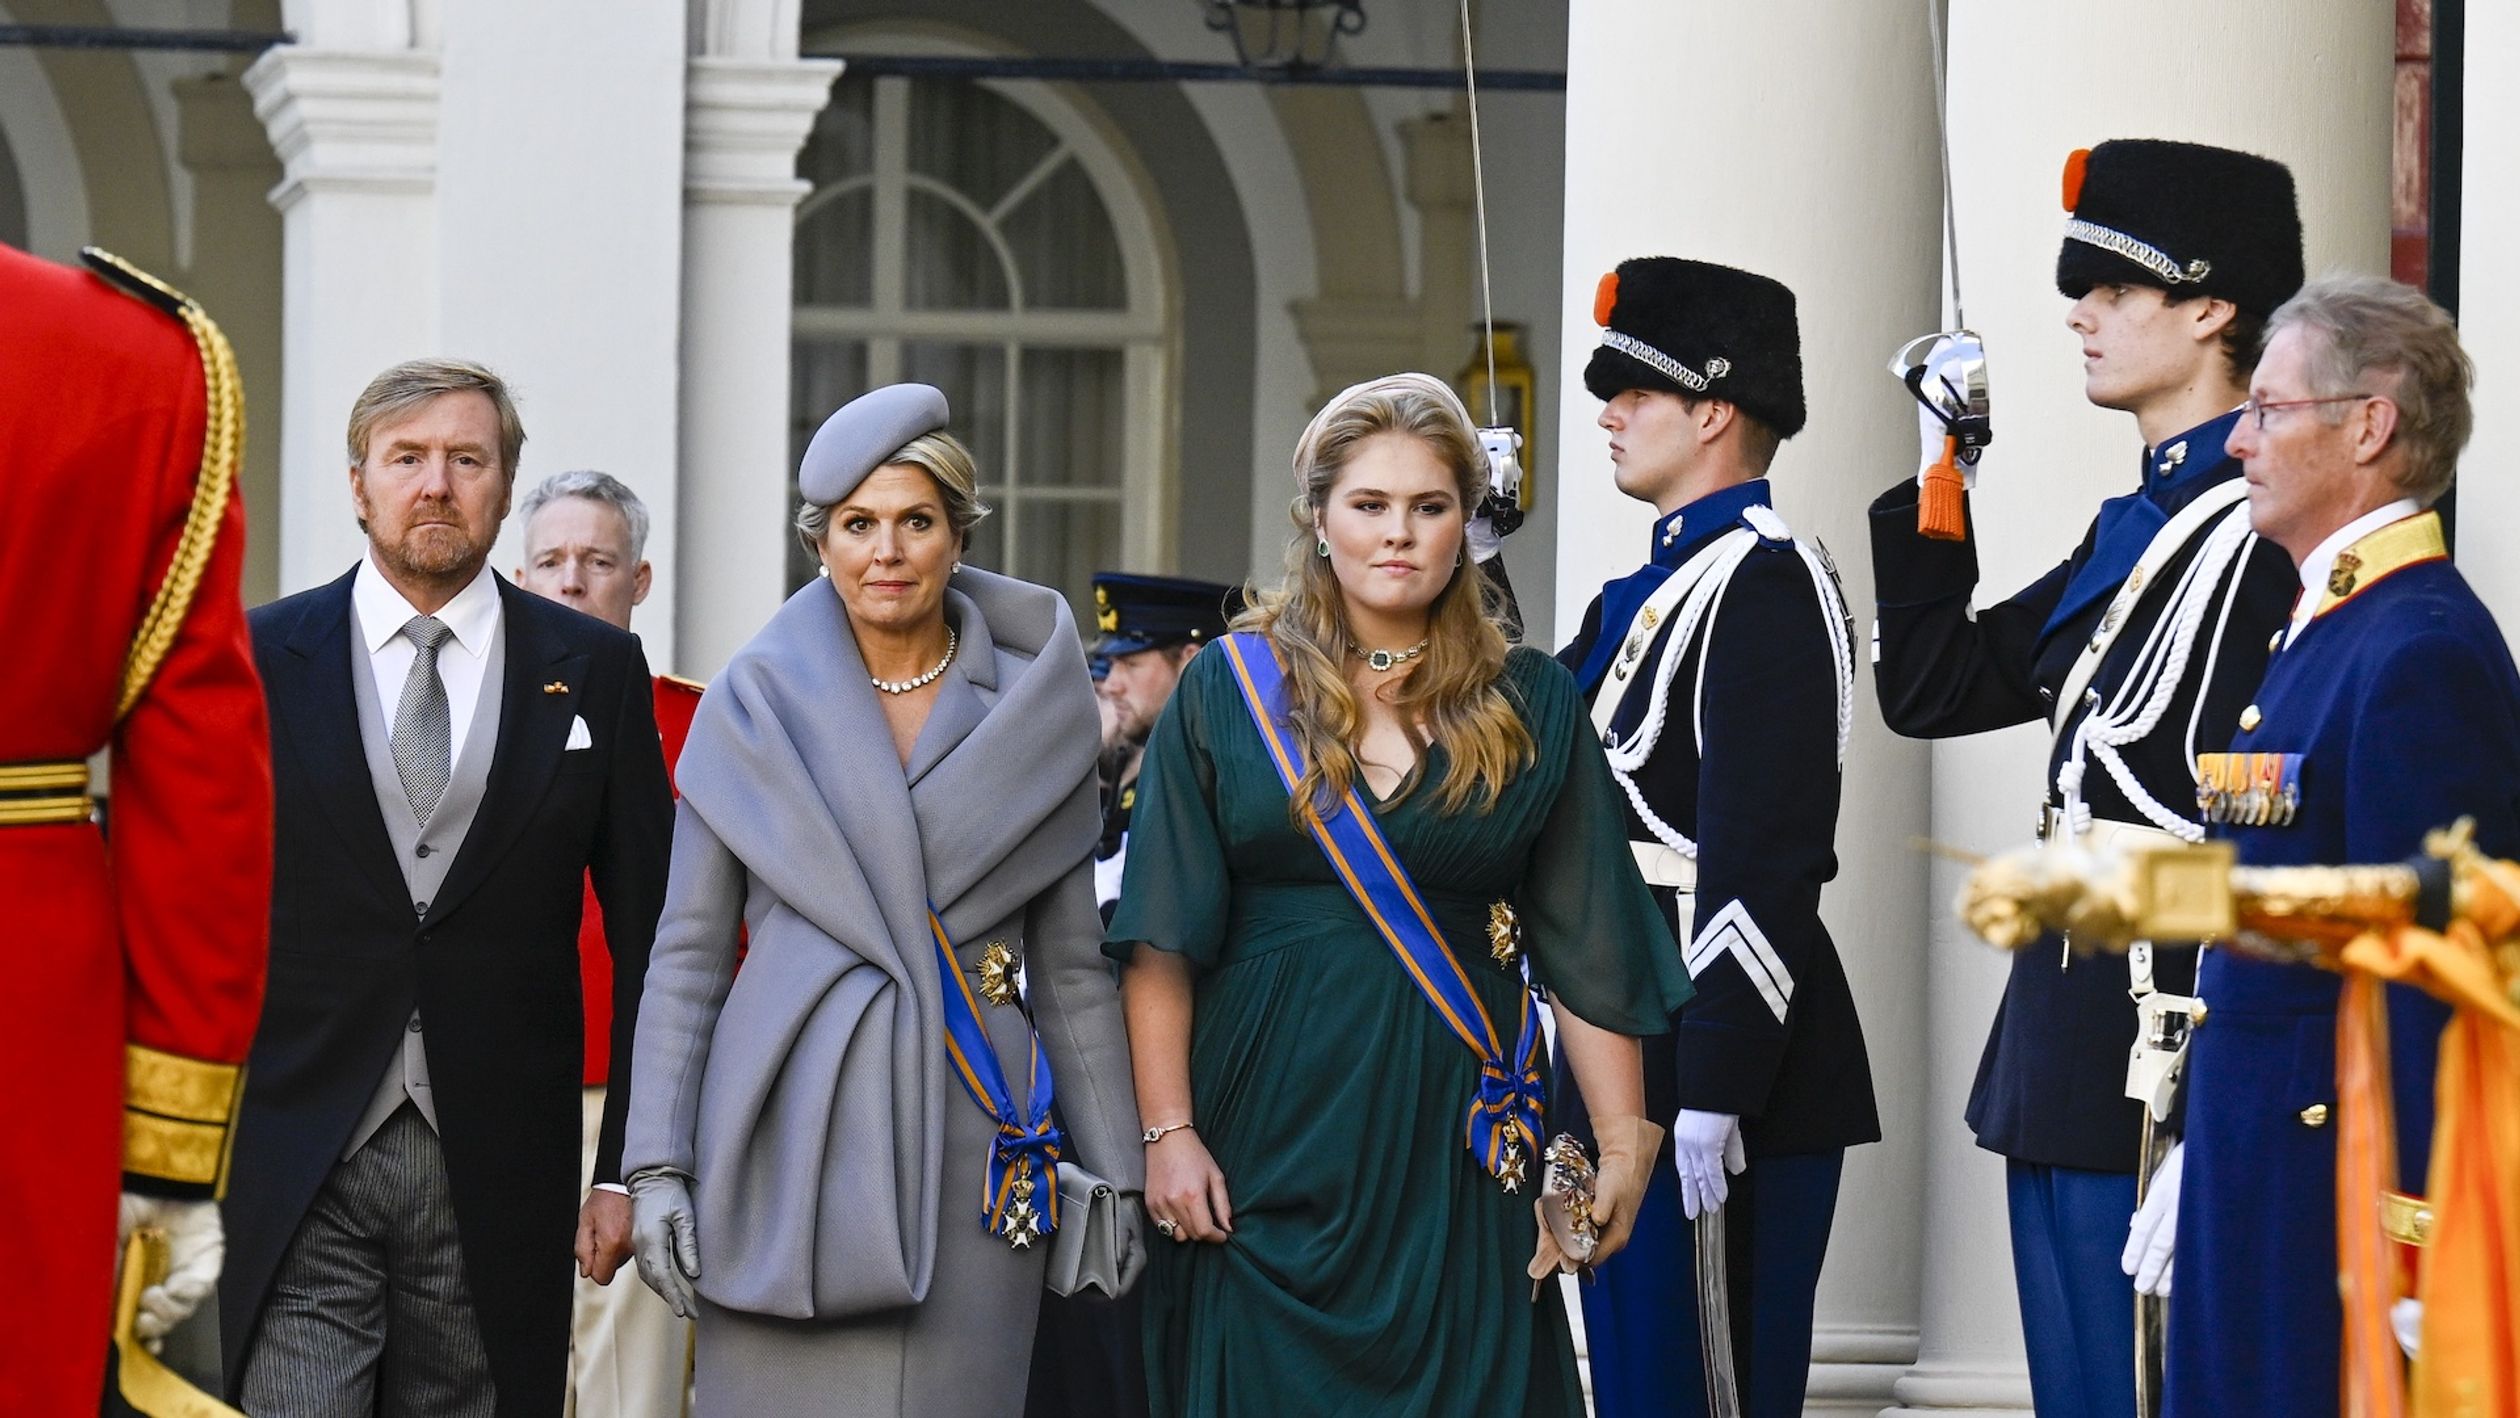 rib R Sui Wat dragen koningin Máxima en prinses Amalia op Prinsjesdag? - Blauw Bloed